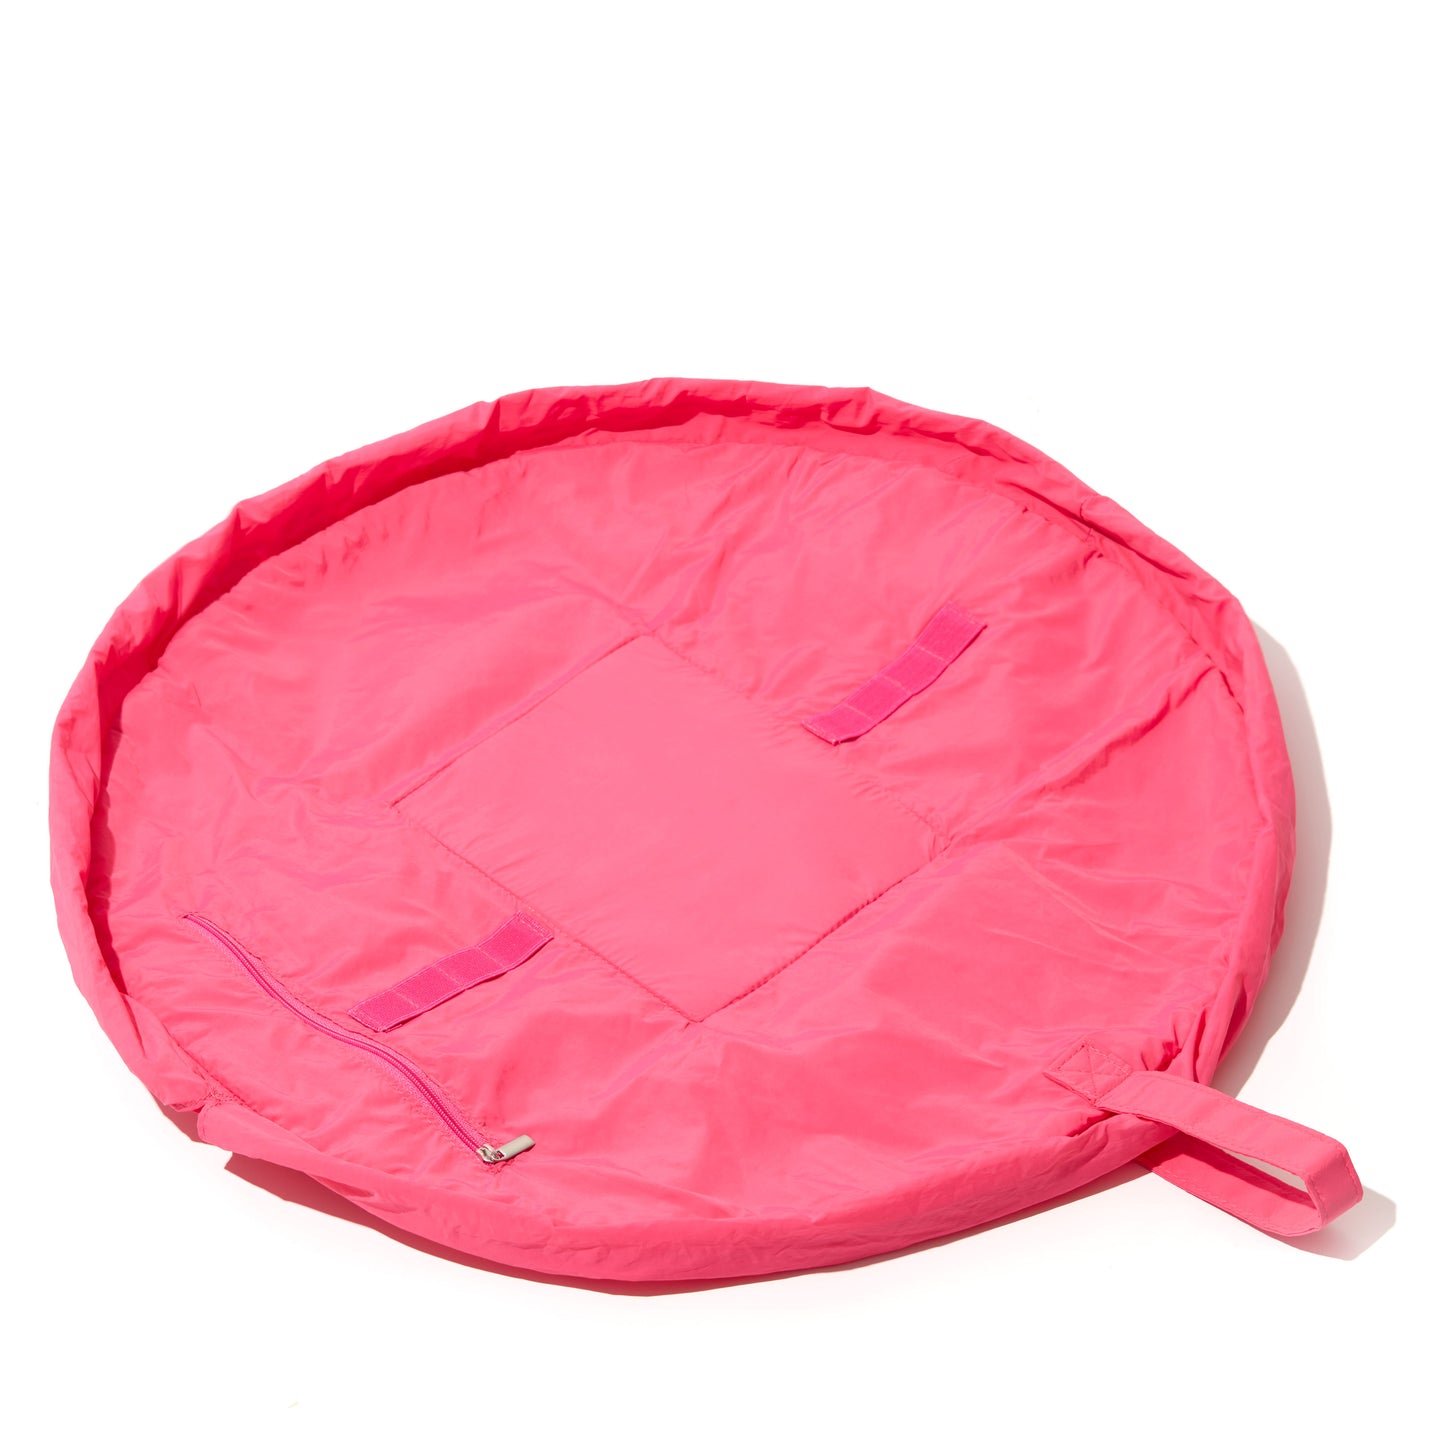 The Flat Lay Co. Drawstring Makeup Bag in Hot Pink Parachute